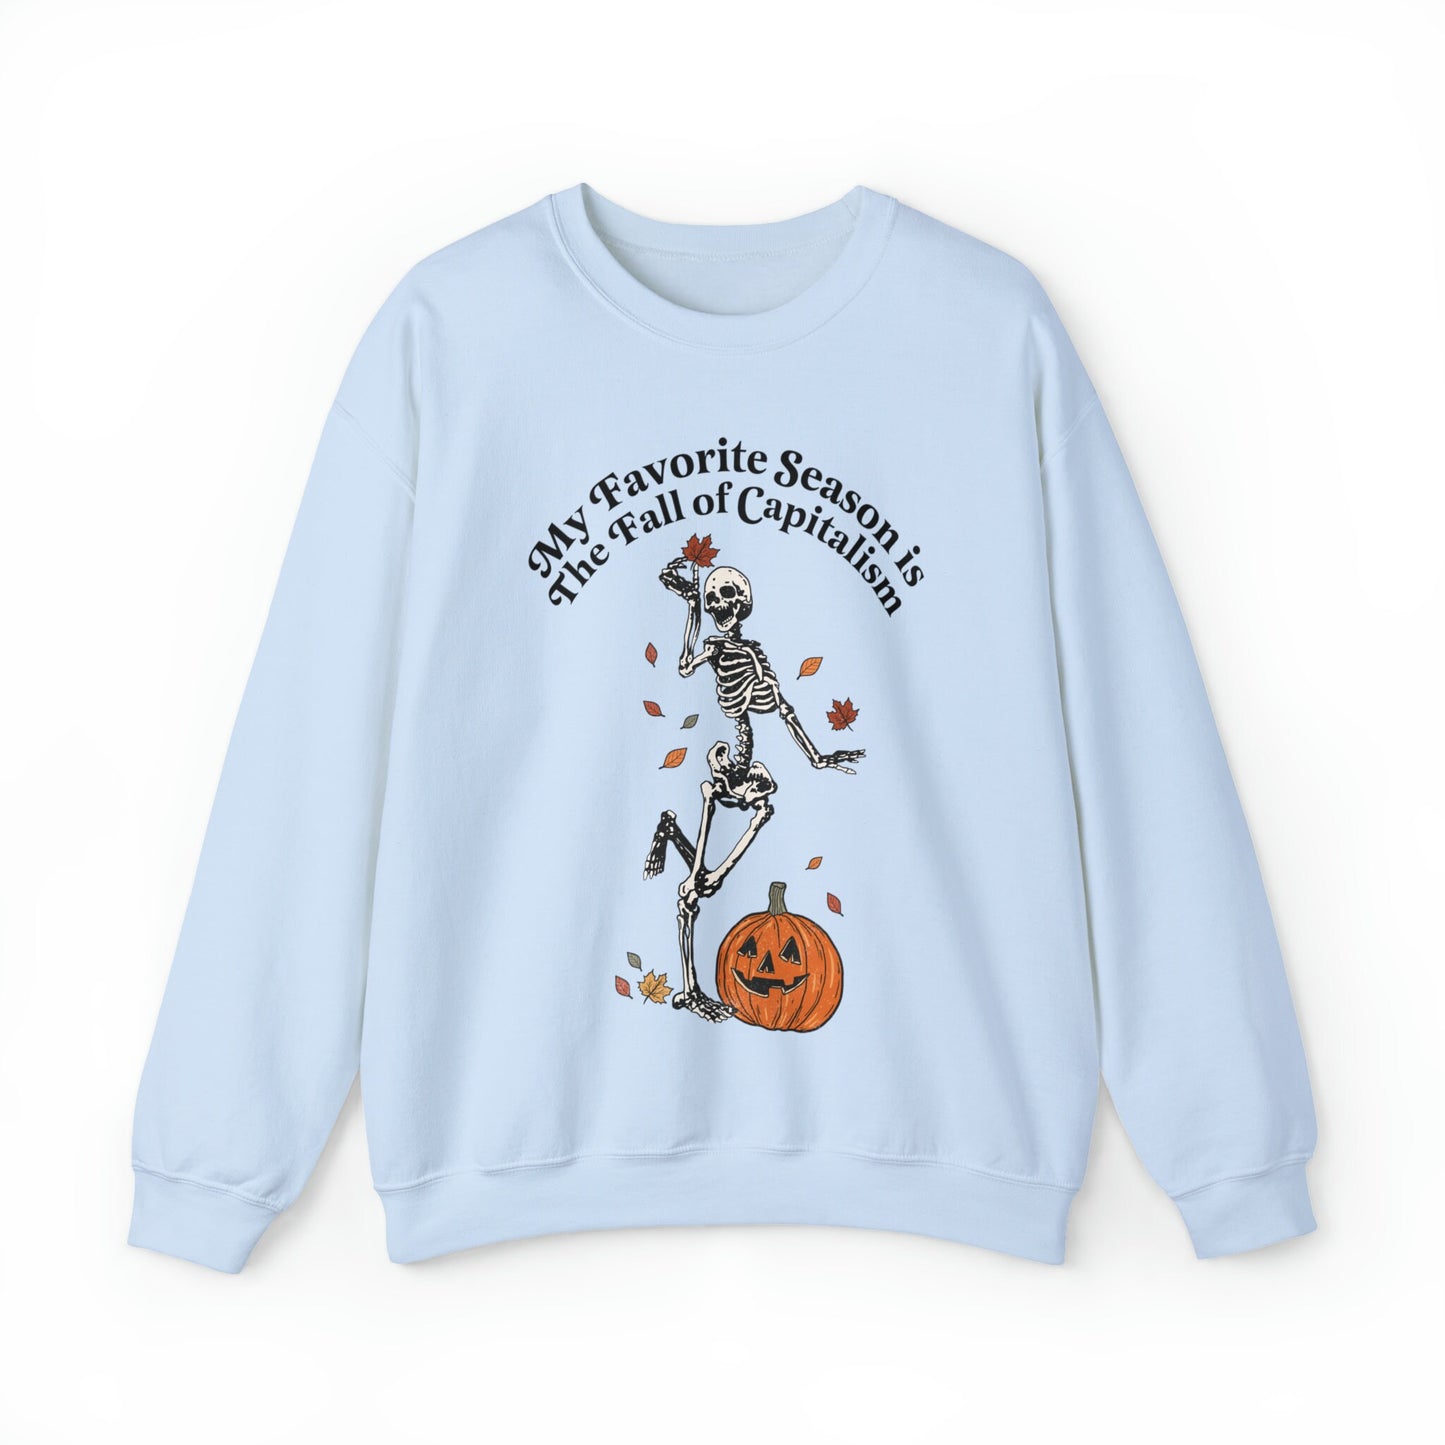 My favorite season is the fall of the capitalism sweatshirt